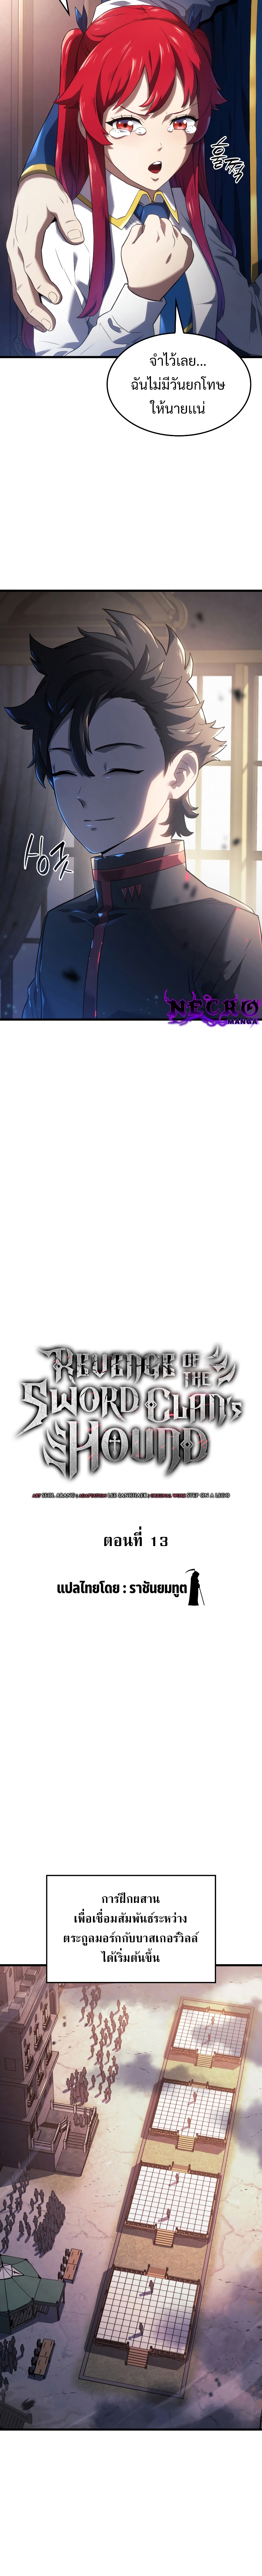 Revenge of the Sword Clans Hound 13.07